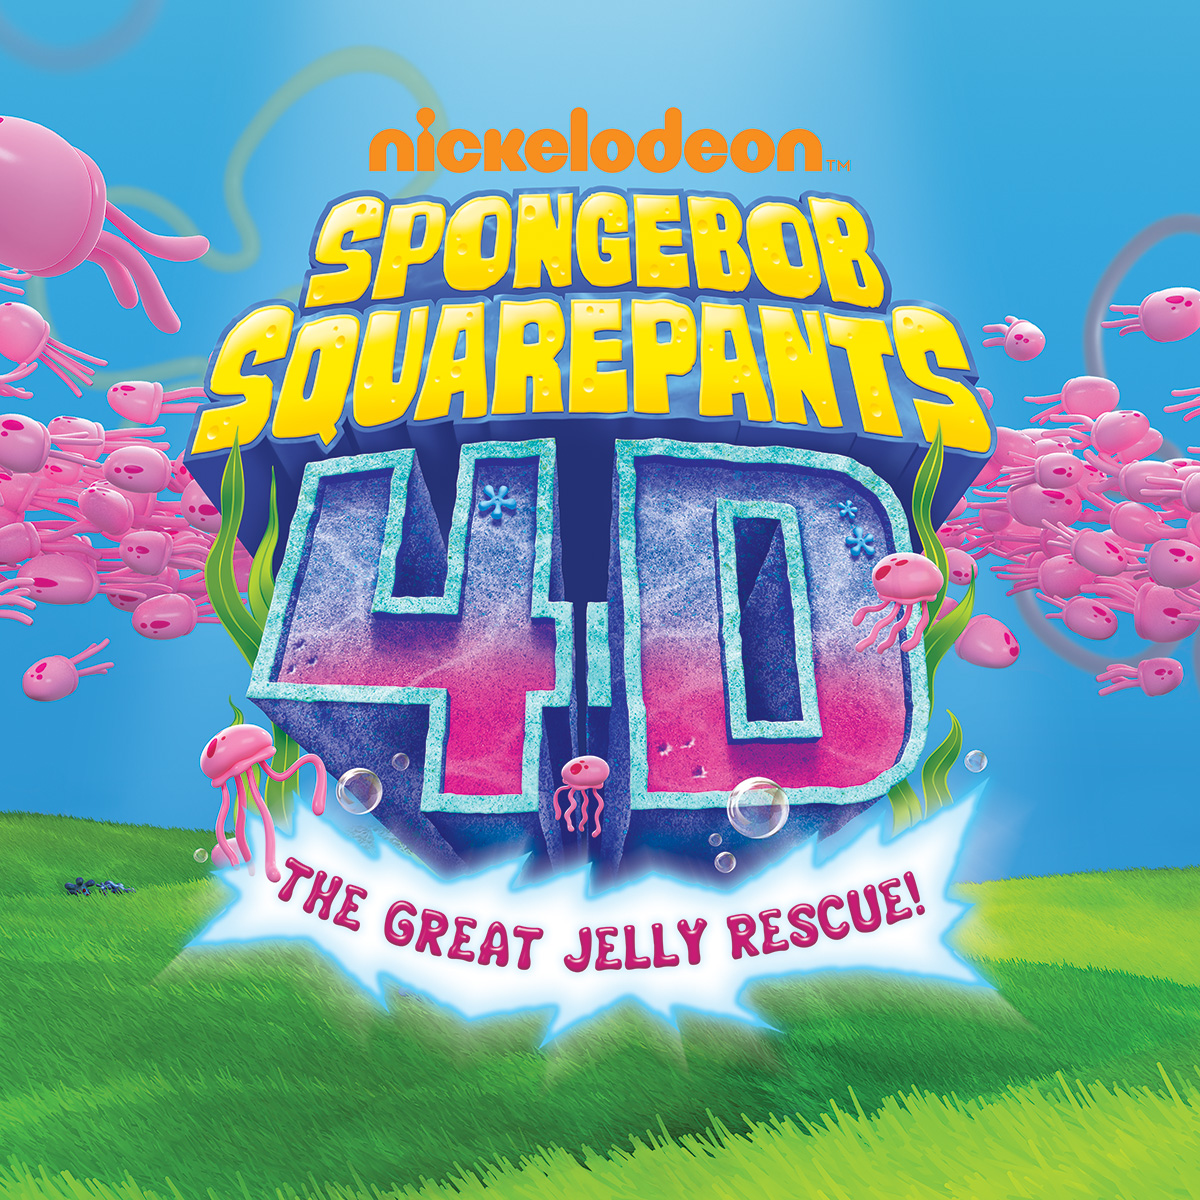 spongebob squarepants 4d logo